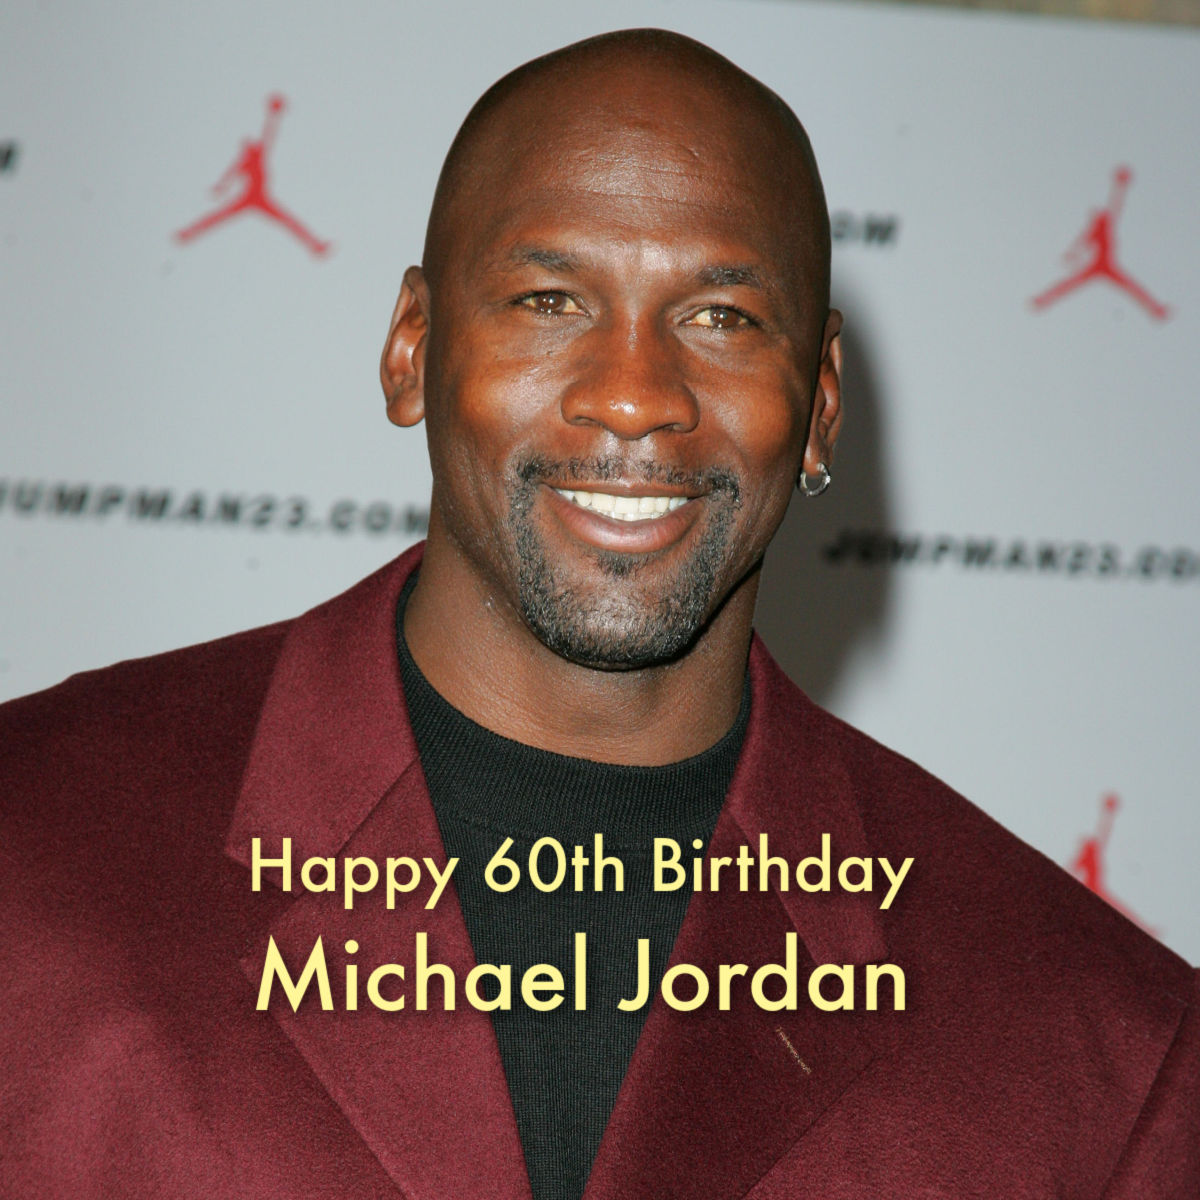 Happy 60th Birthday, Michael Jordan!